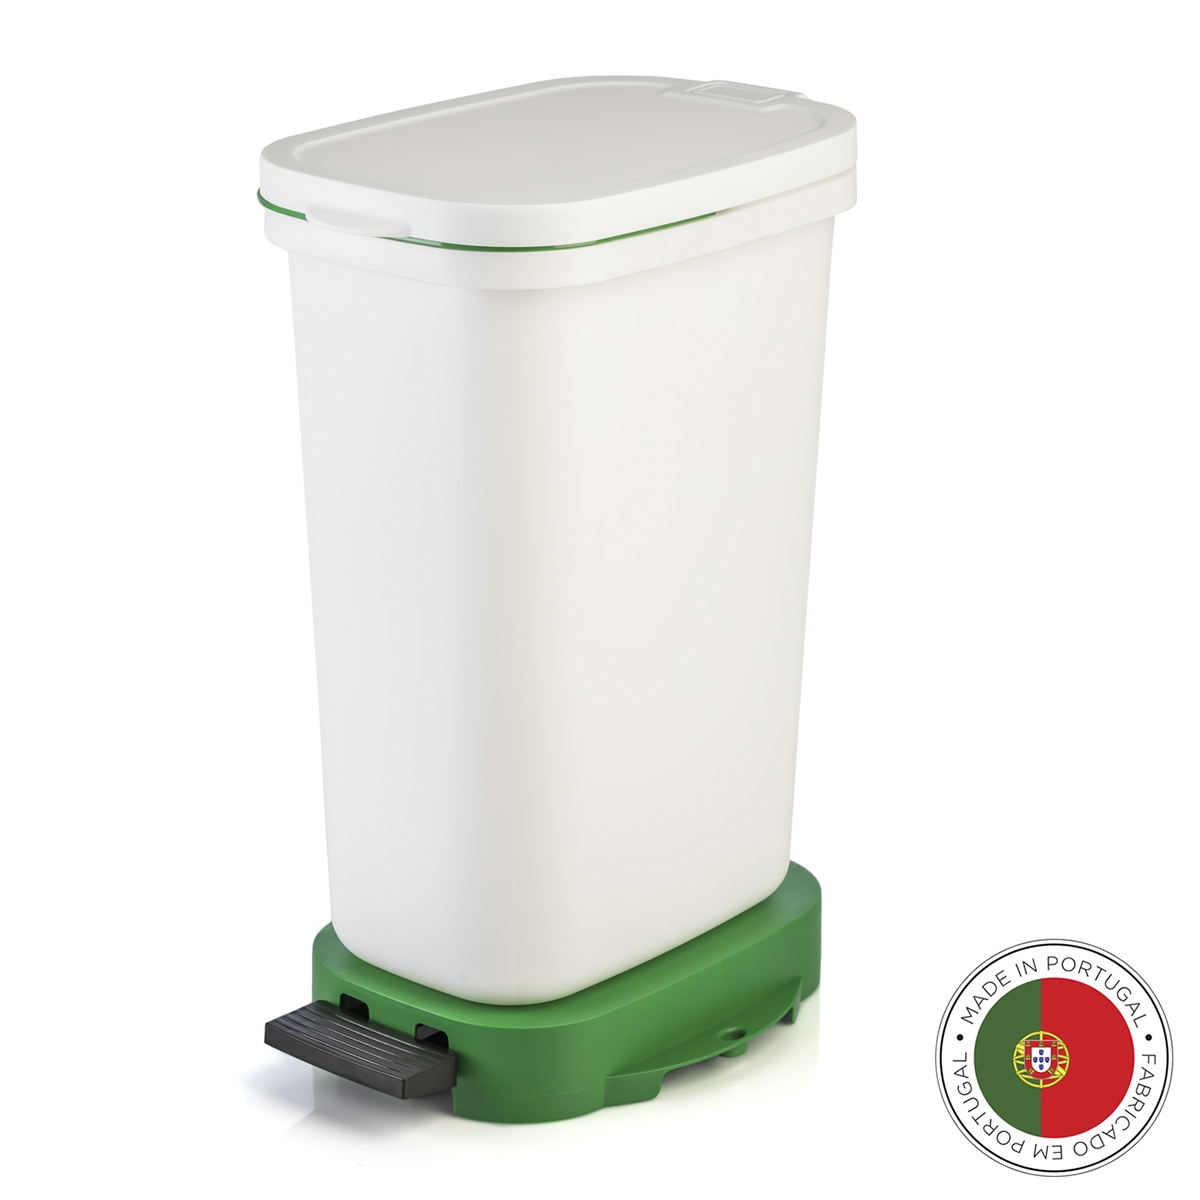 Мусорный бак с педалью BE-ECO white green, 26х36 см, 50 см, 20 л, Пластик, Faplana, Португалия